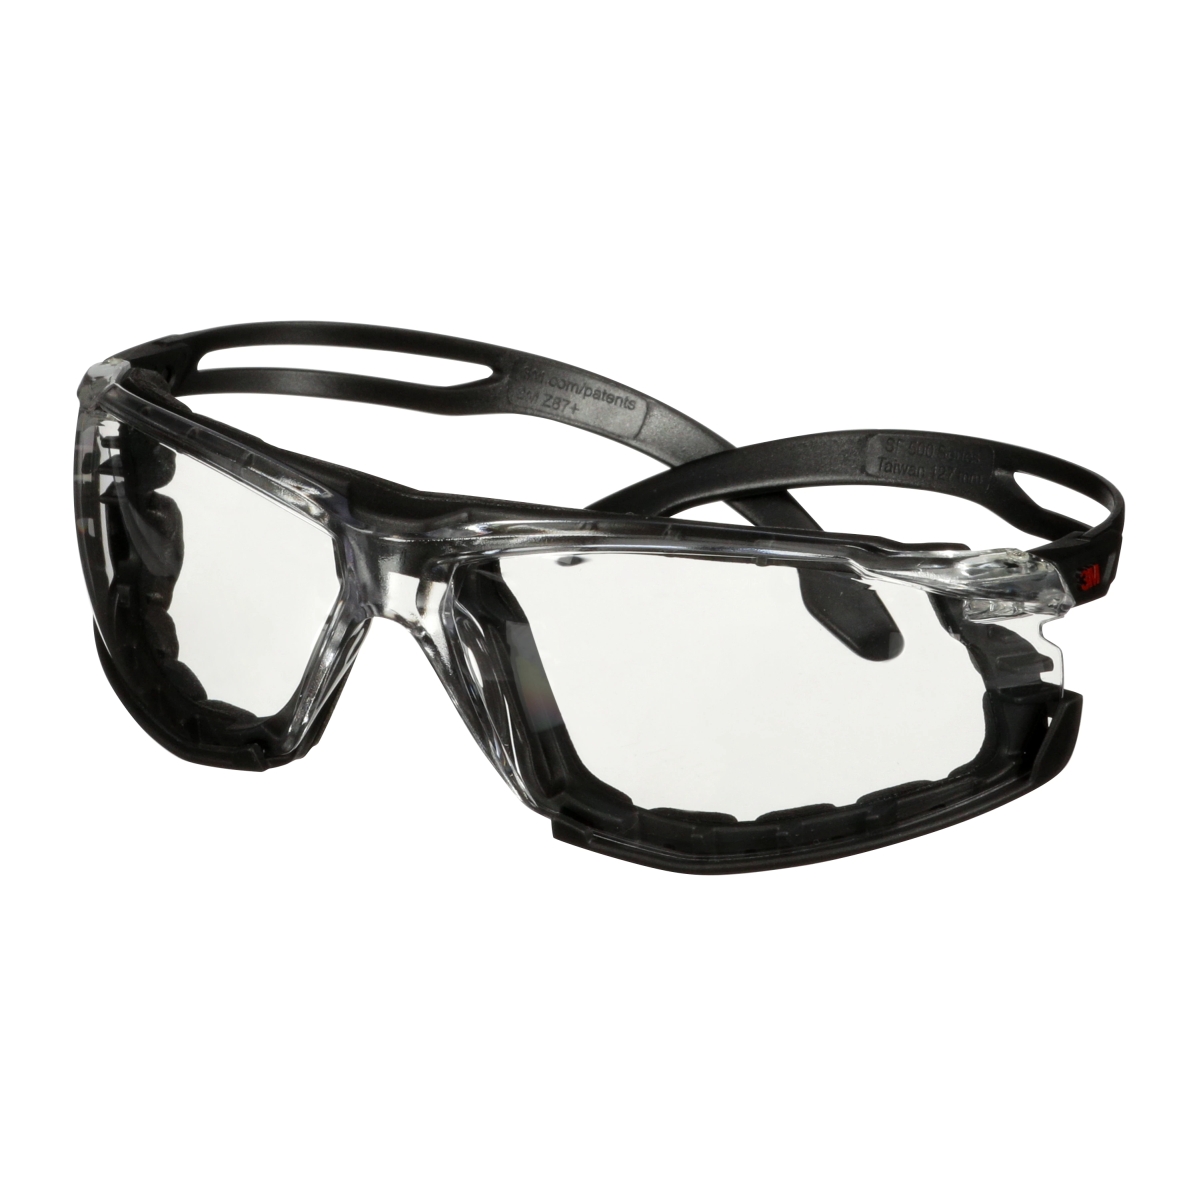 3M SecureFit 500 safety spectacles, with foam frame, black temples, Scotchgard anti-scratch/anti-fog coating (K&amp;N), clear lens, SF501SGAF-BLK-FM